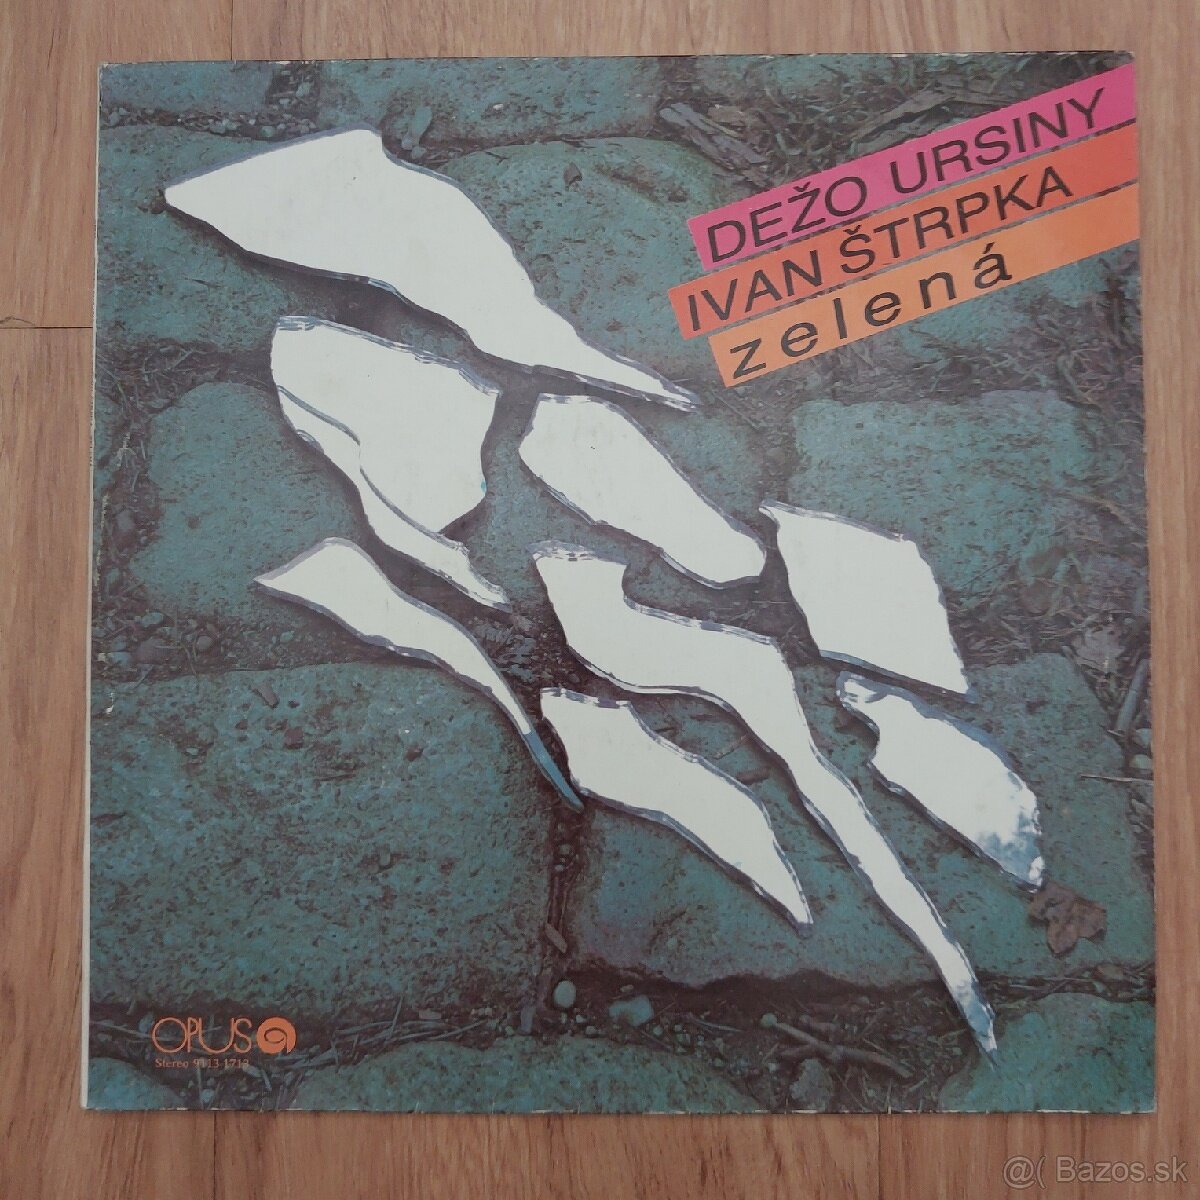 Dezo Ursiny Zelena LP